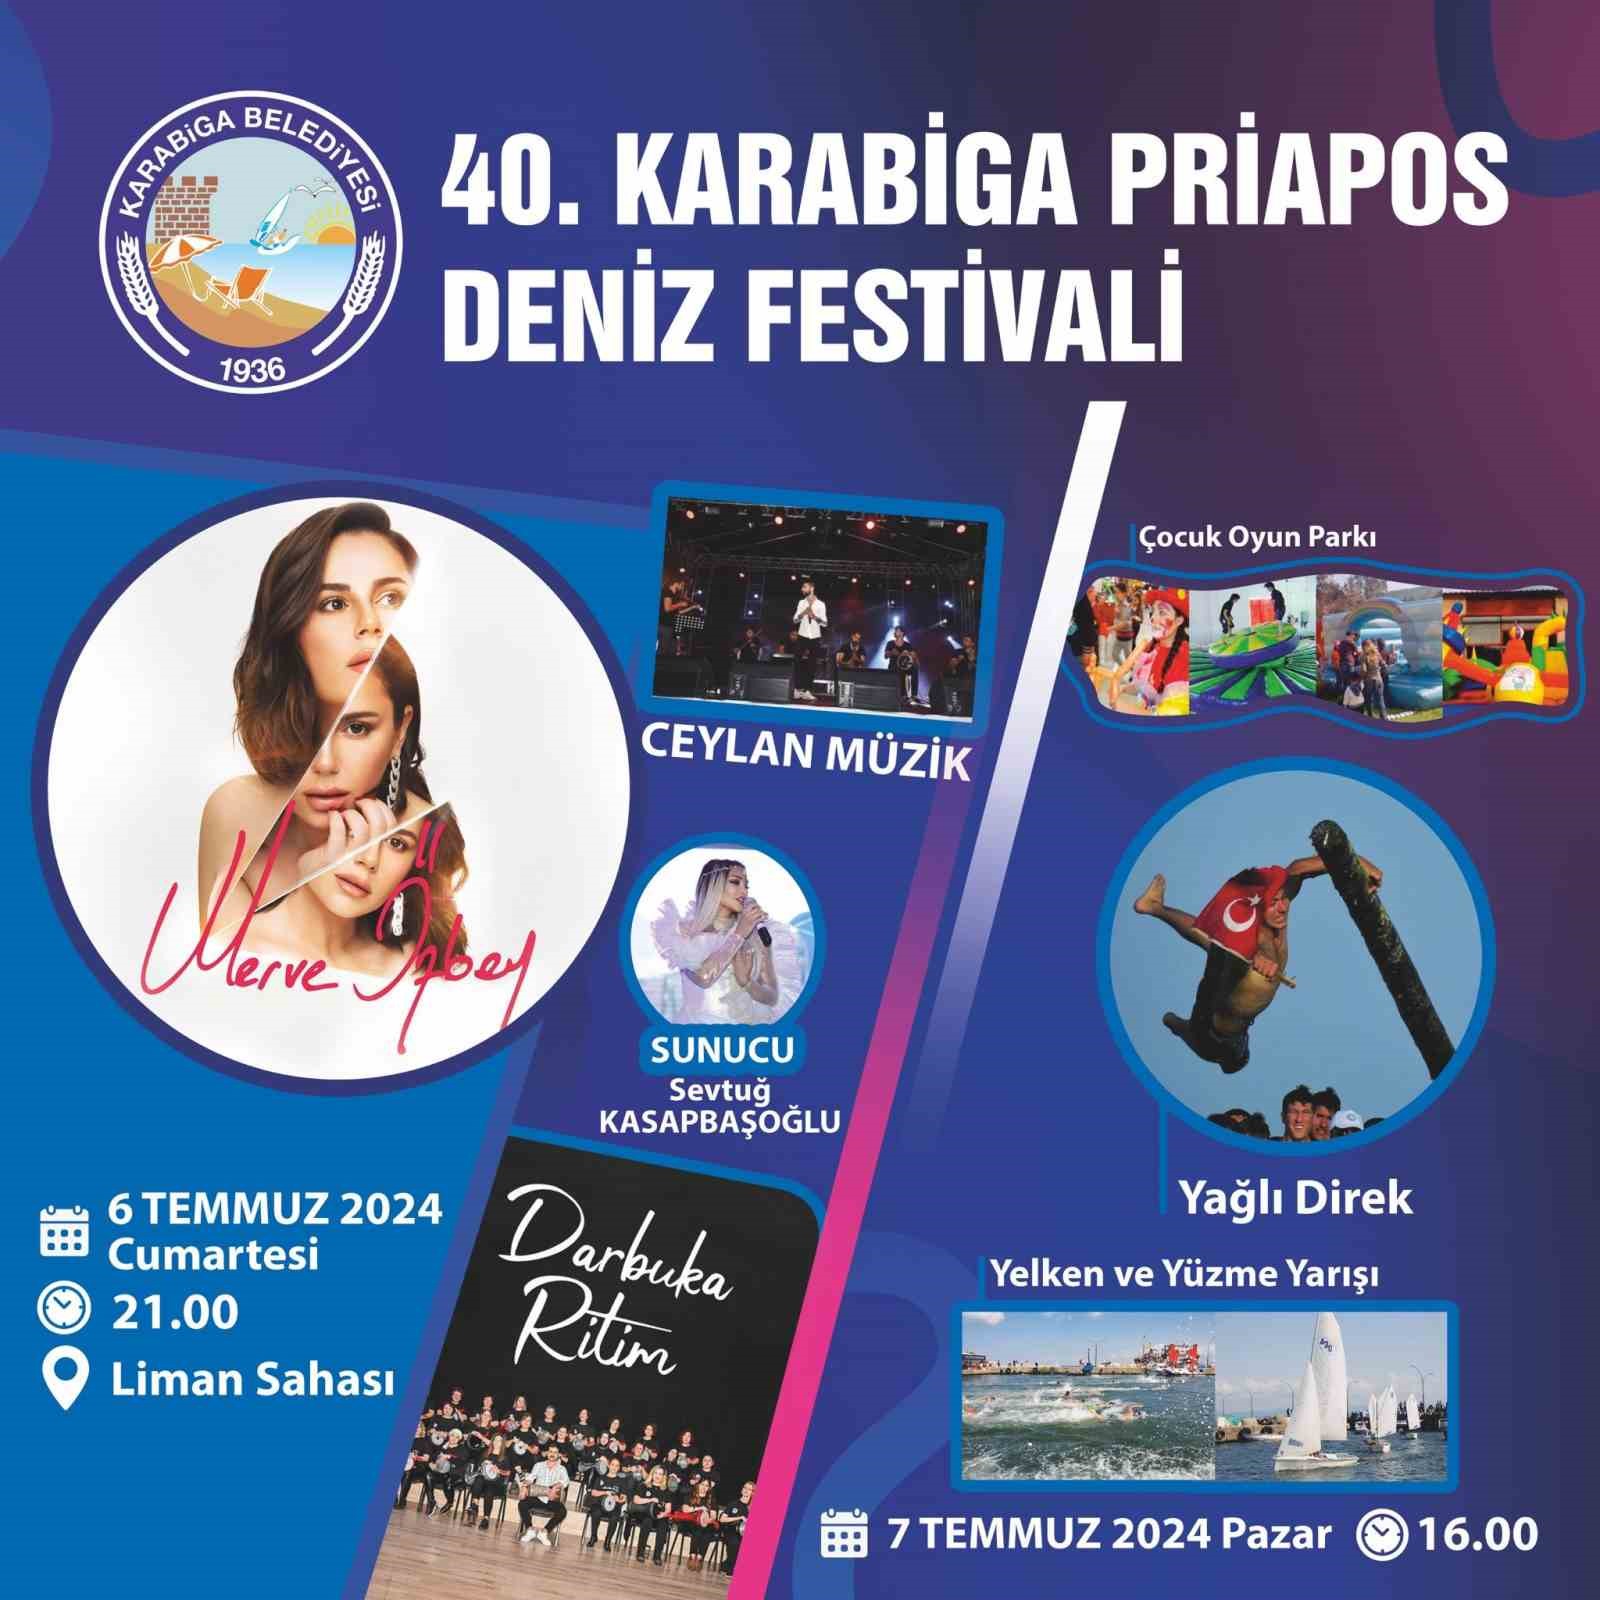 40. Karabiga Priapos Deniz Festivali coşkuyla kutlanacak
